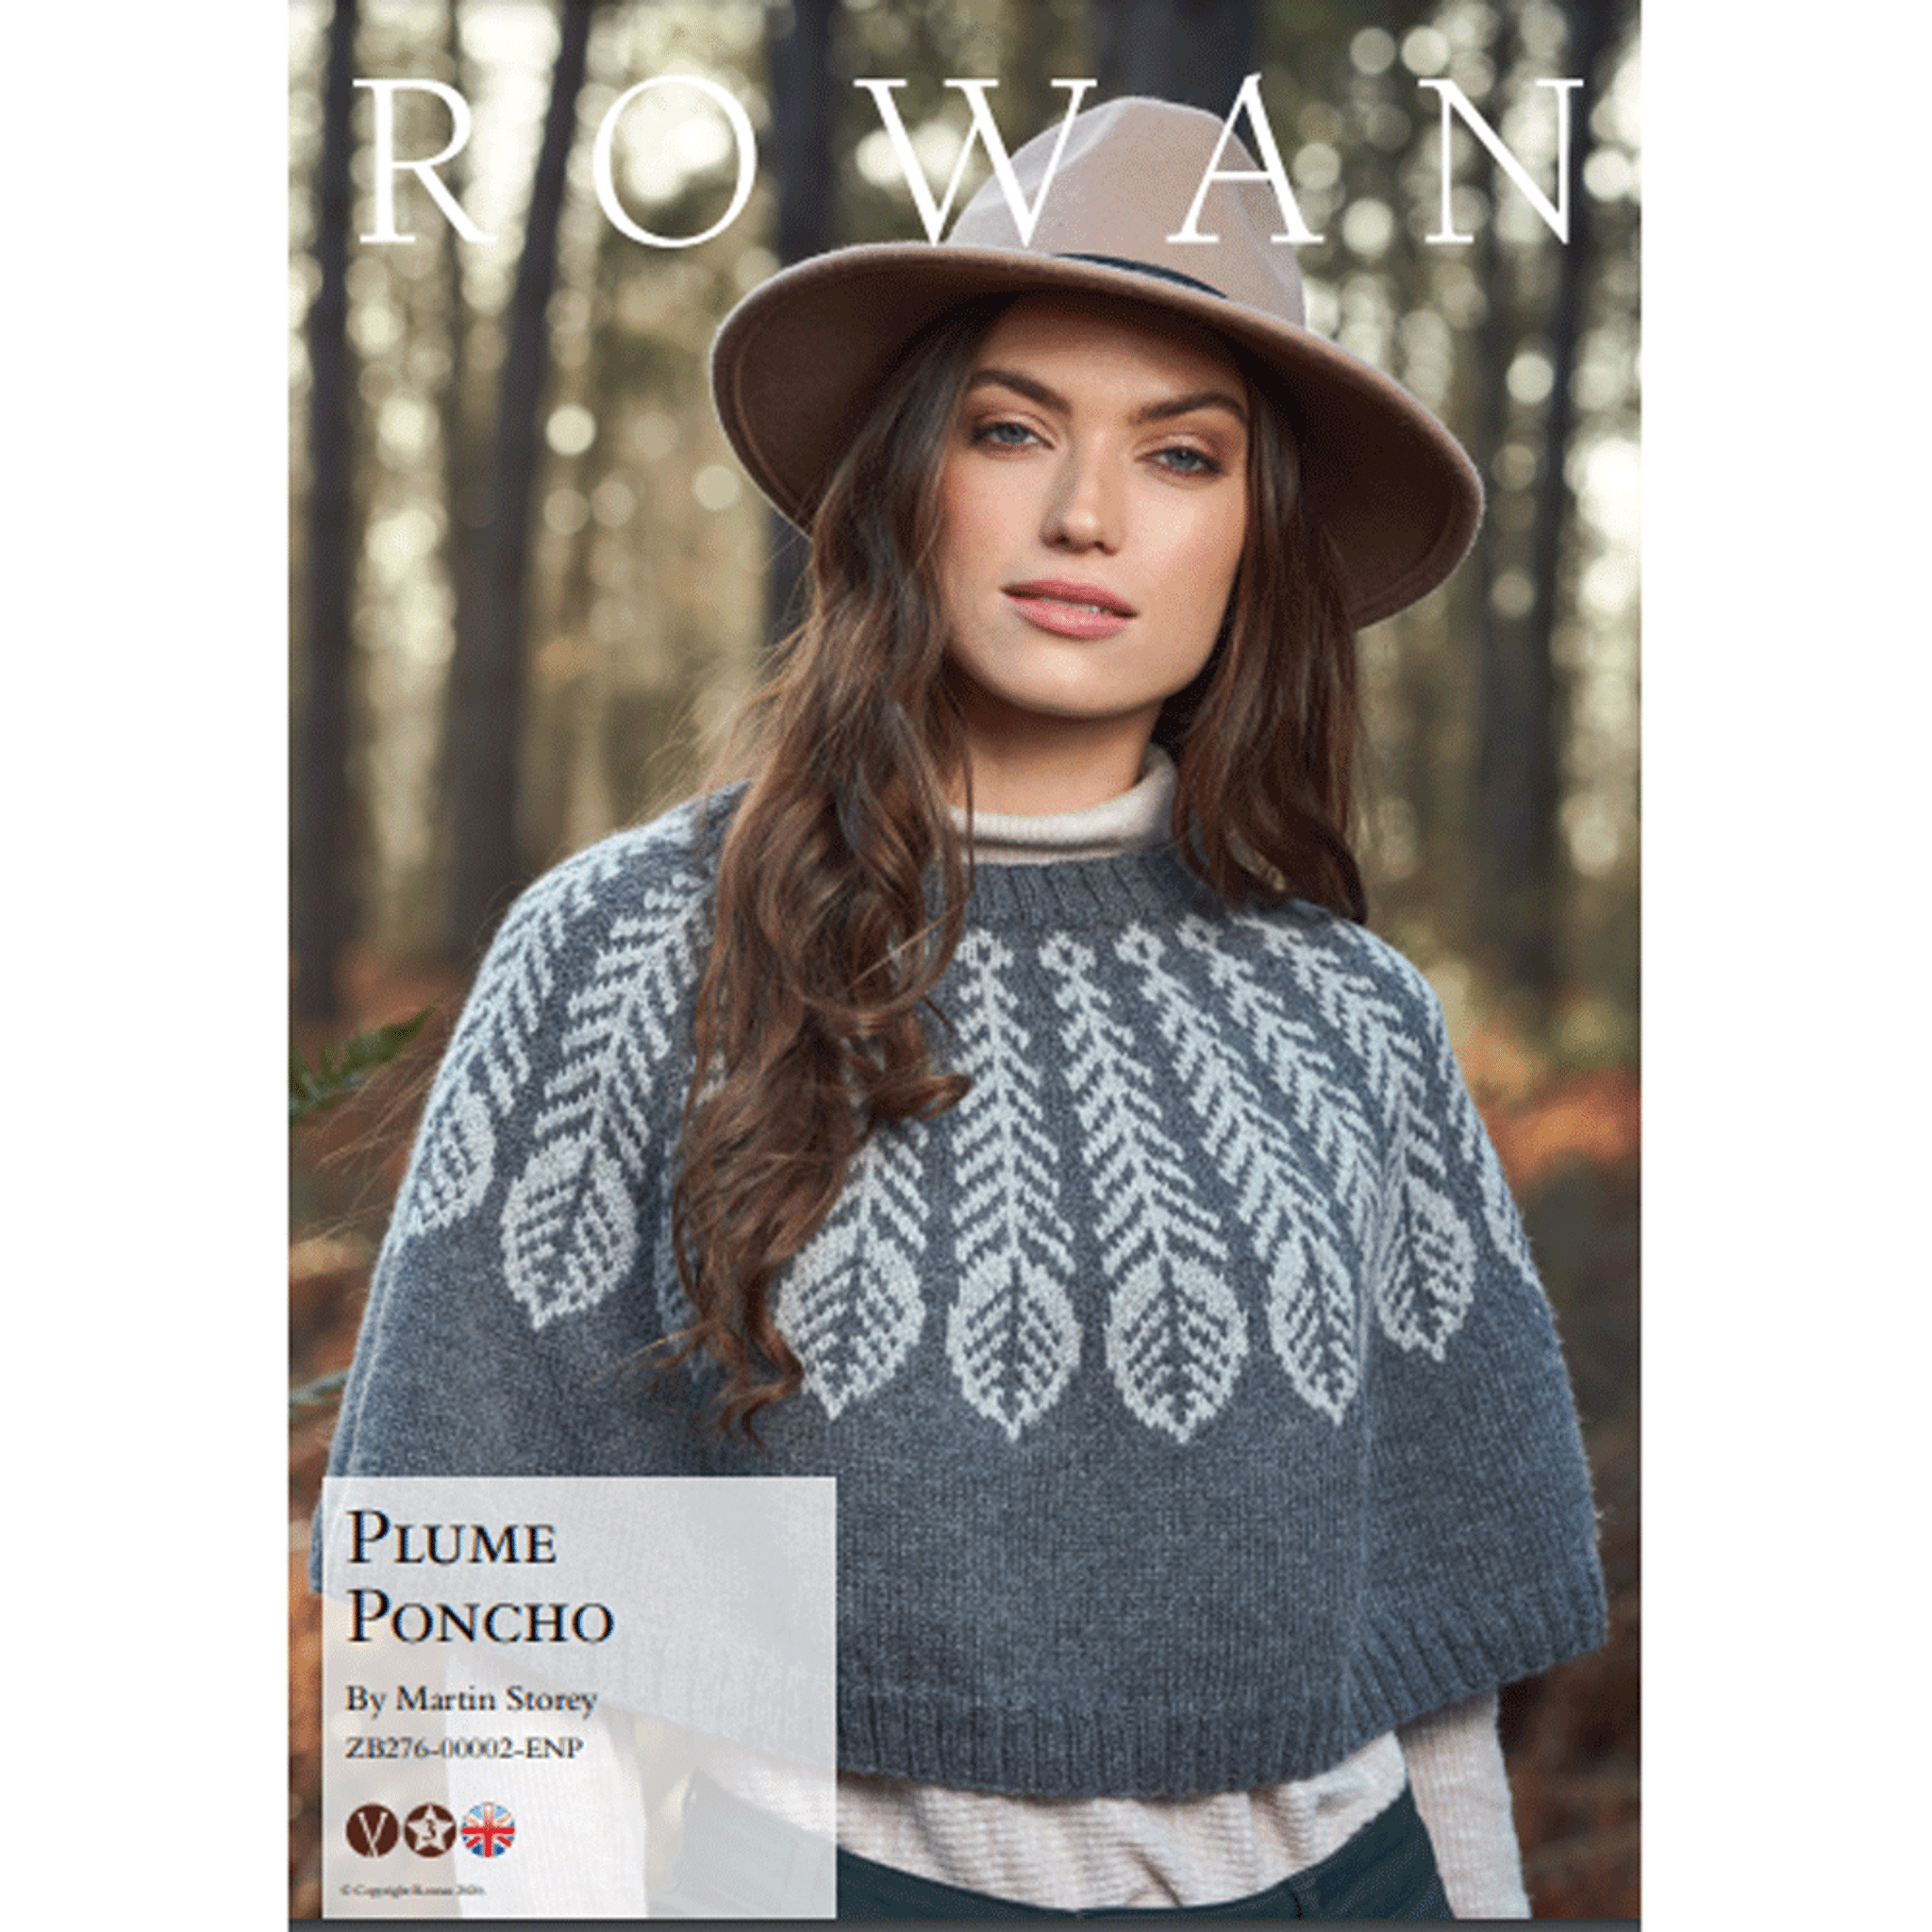 Rowan Women's Plume Poncho Knitting Pattern using Alpaca Soft DK